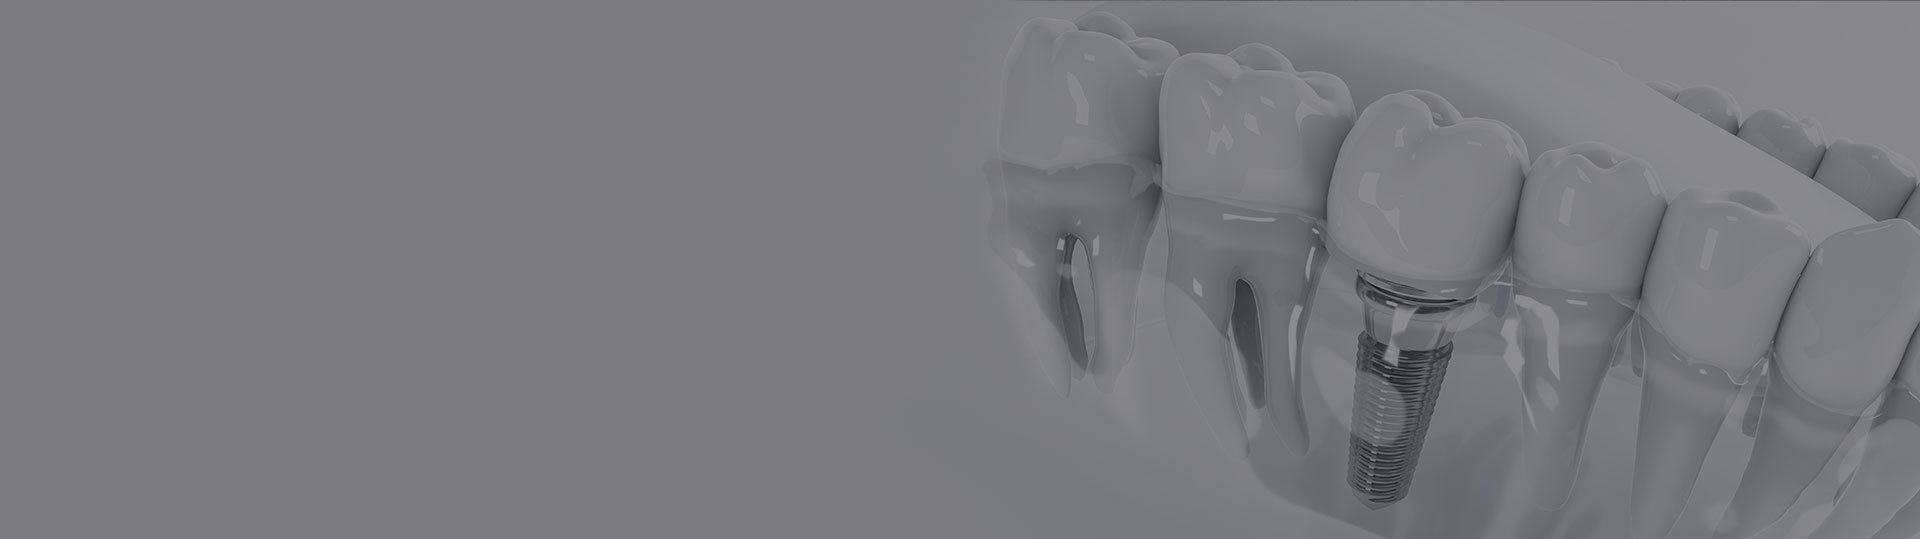 Implant Dentar Alor Esthetic Medical City